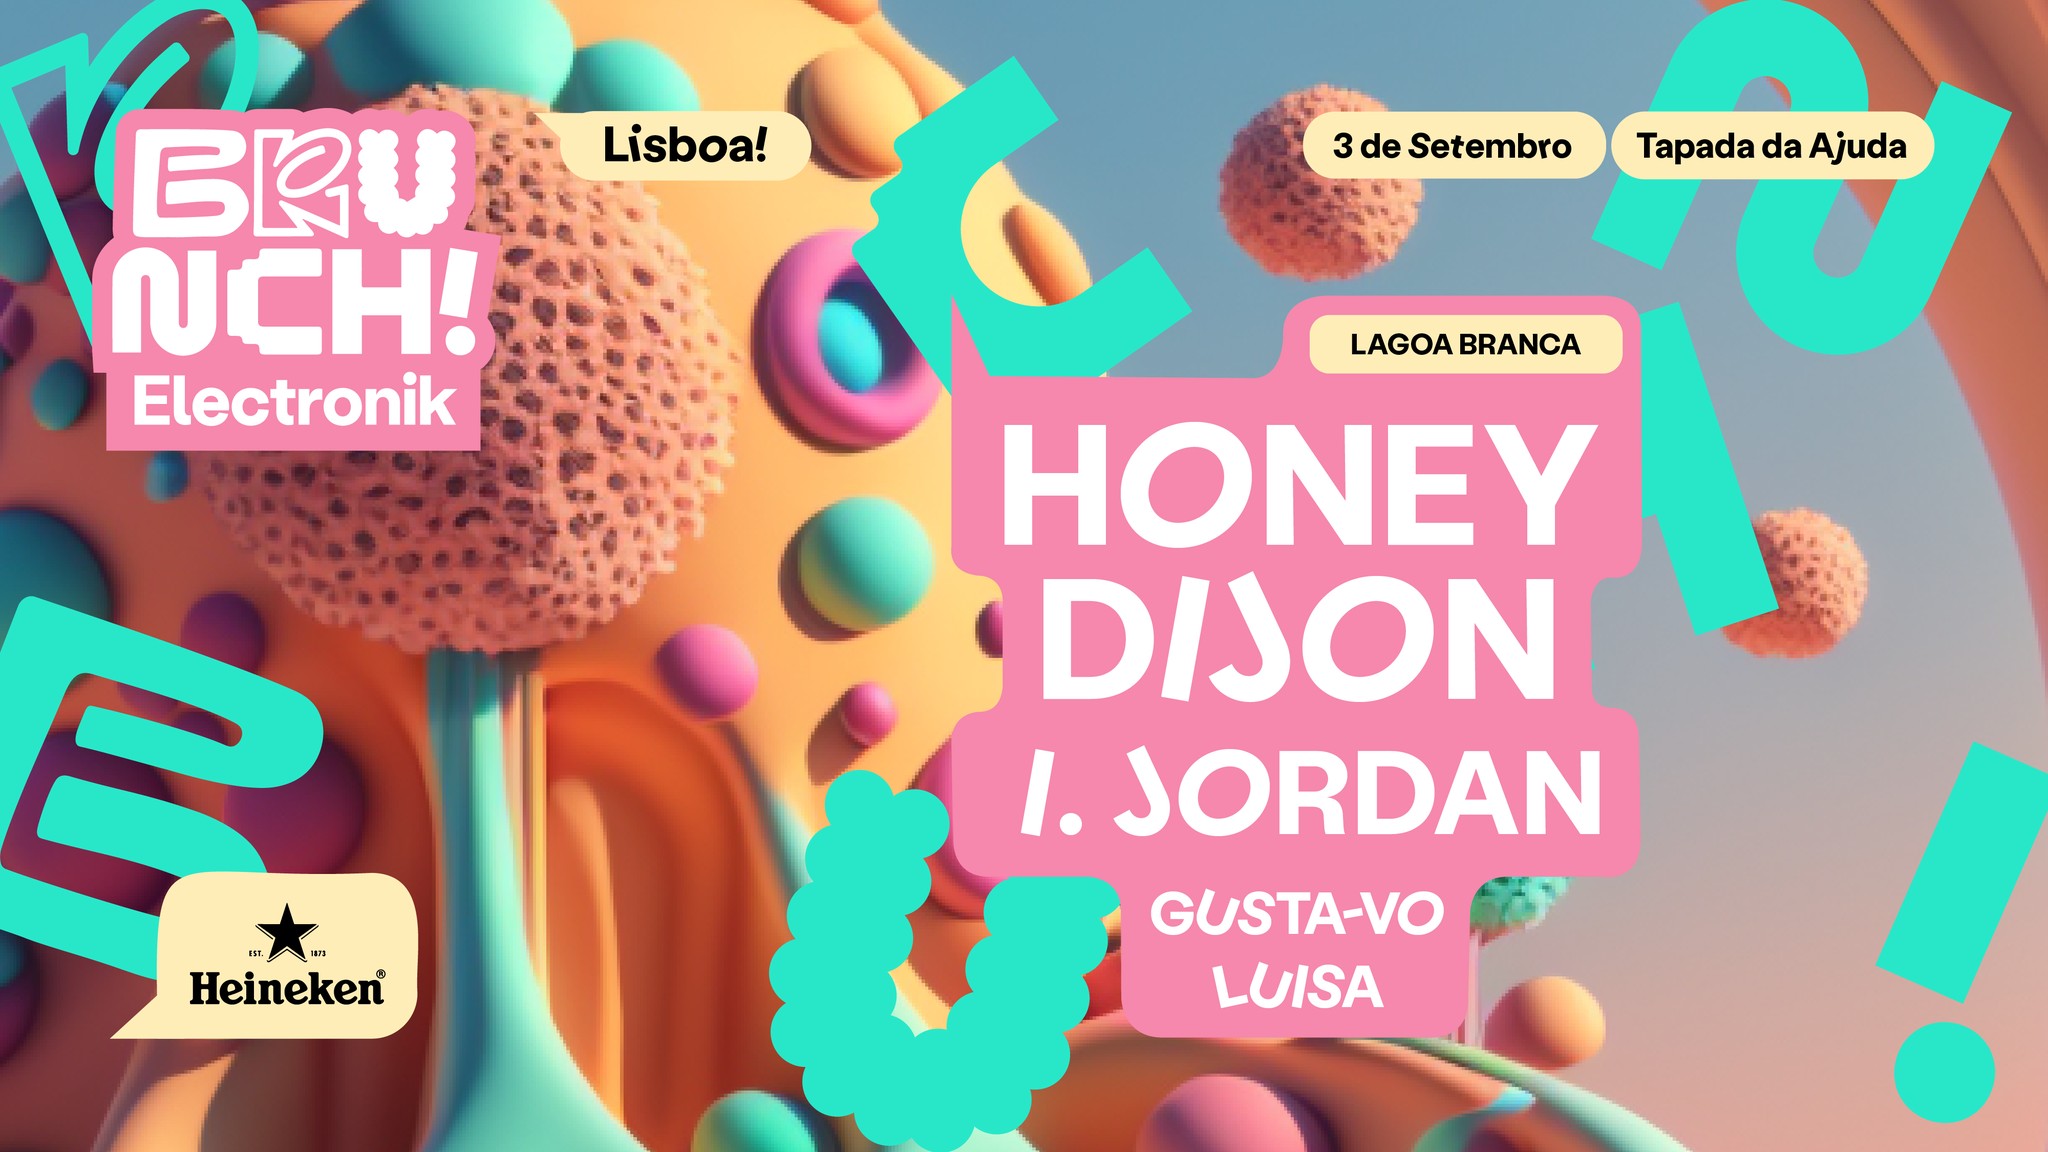 Brunch Electronik Lisboa #7 – Honey Dijon, I. Jordan, Gusta-vo e Luisa